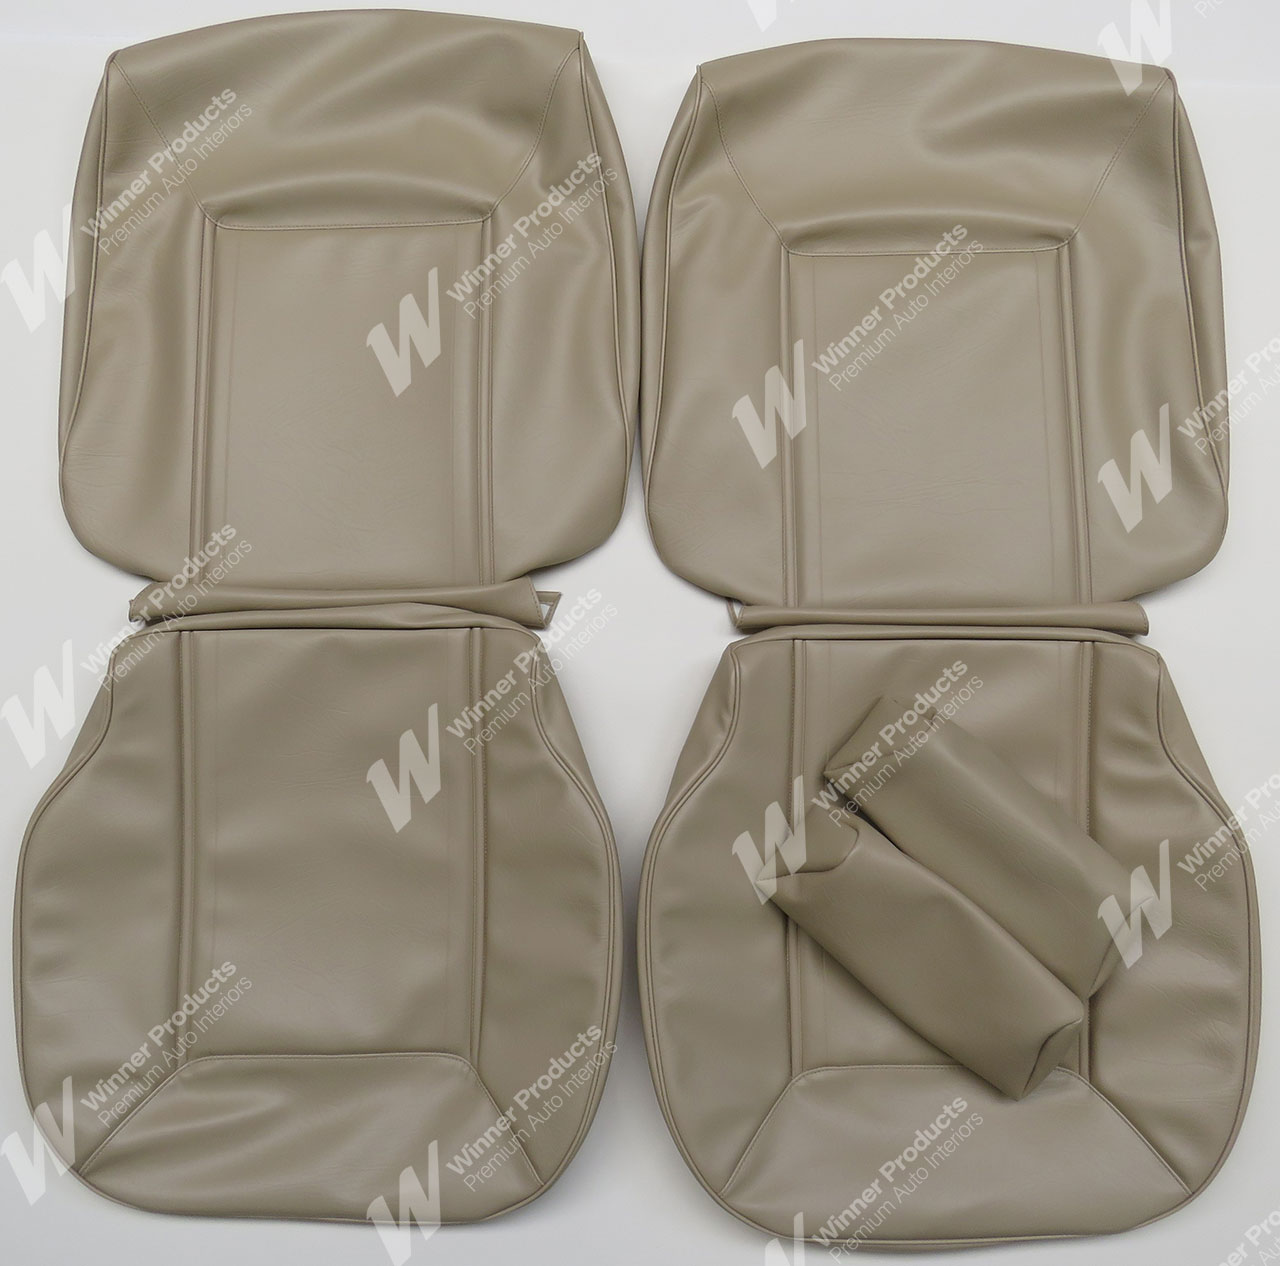 Holden Sandman HQ Sandman Panel Van 38E Doeskin Seat Covers (Image 1 of 5)